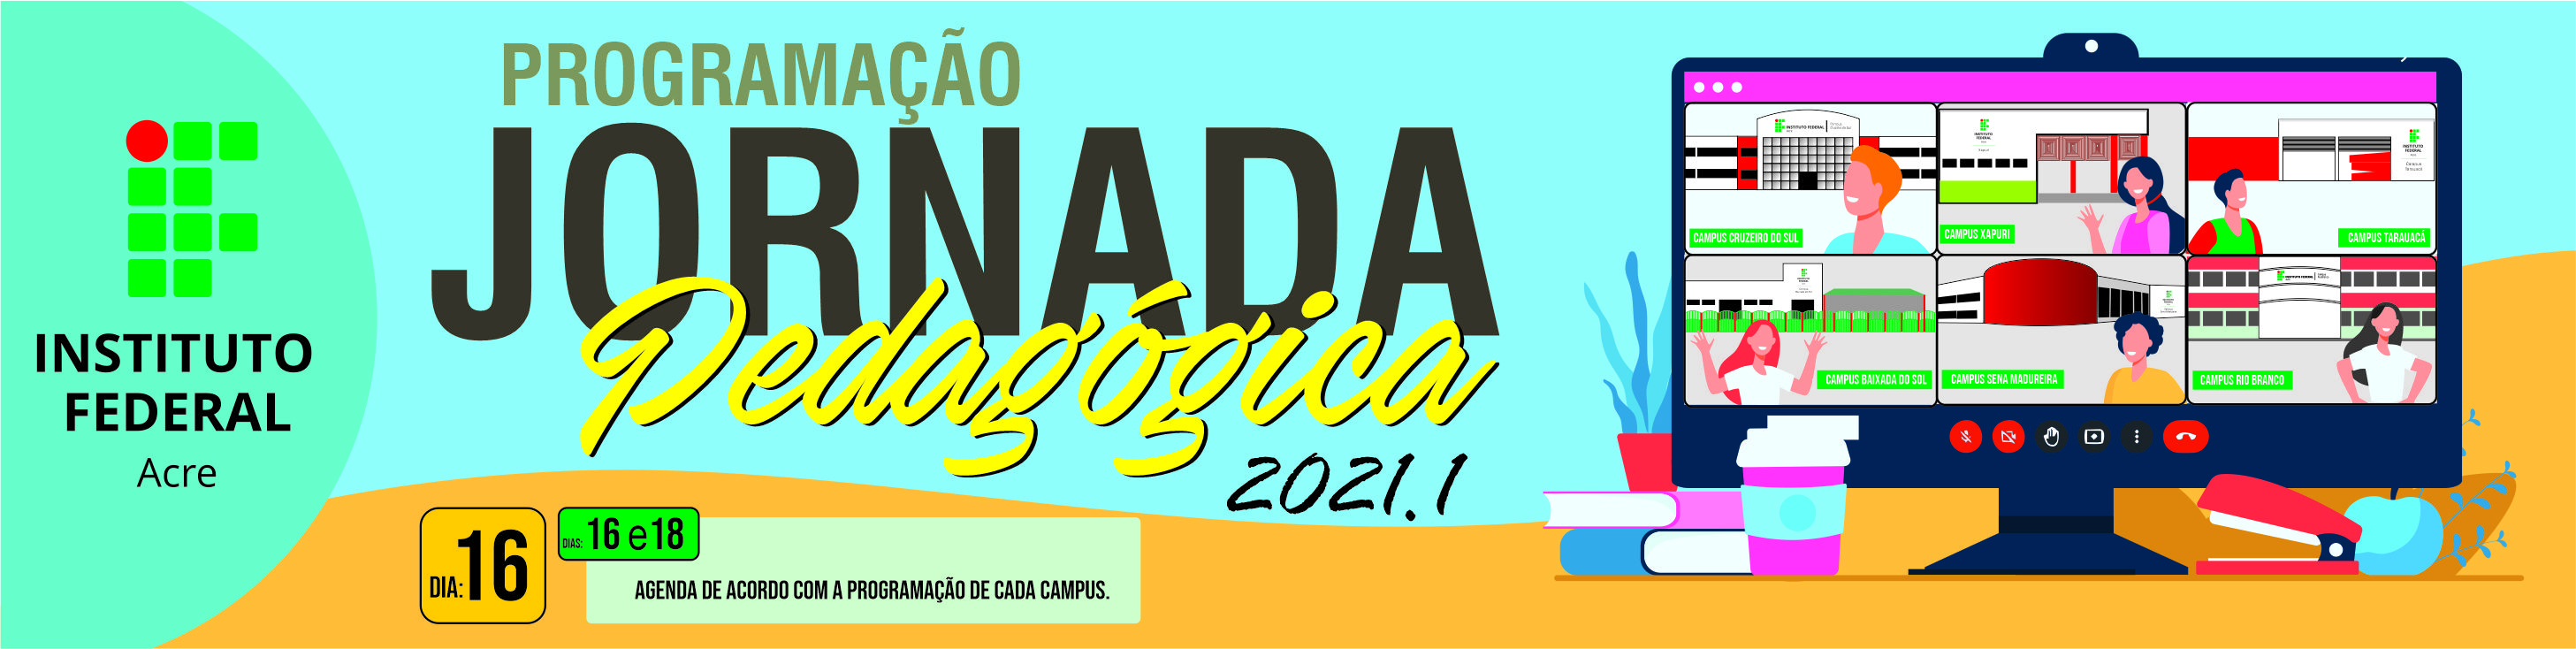 banner do Jornada Pedagógica 2021.1